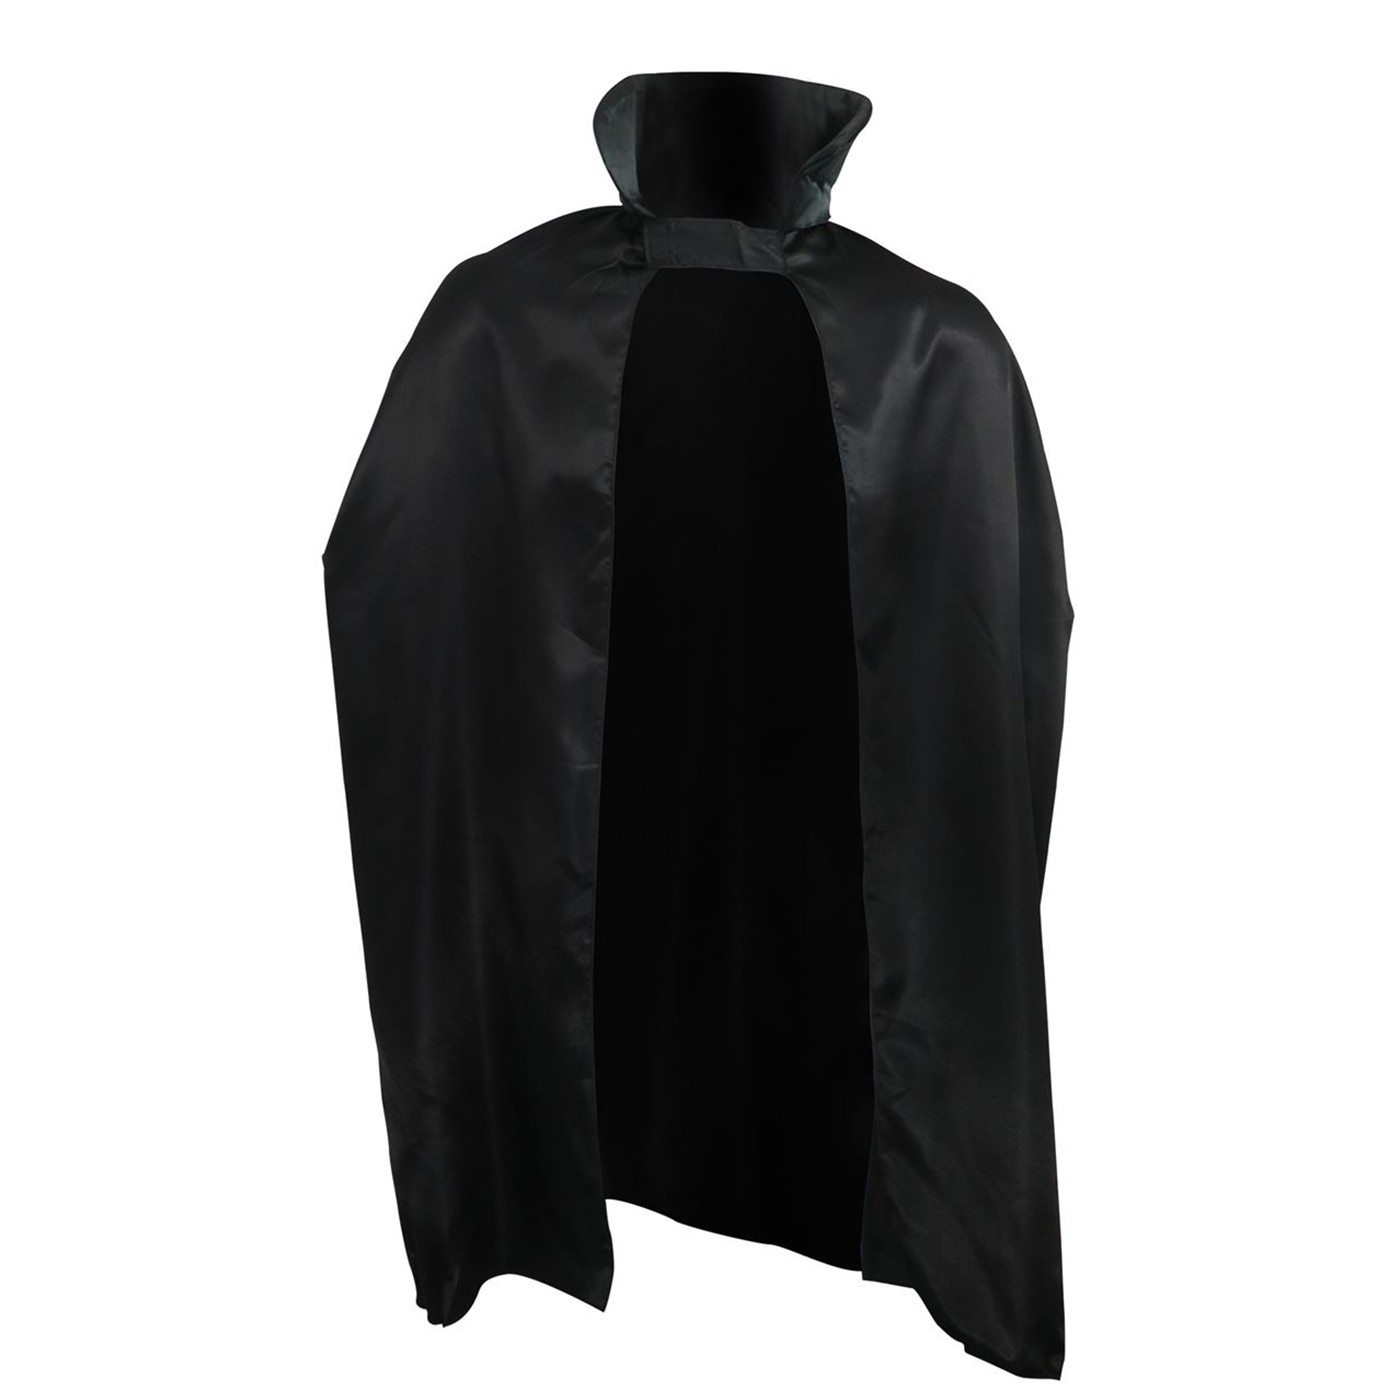 Adult Costume Black Satin 45-Inch Cape